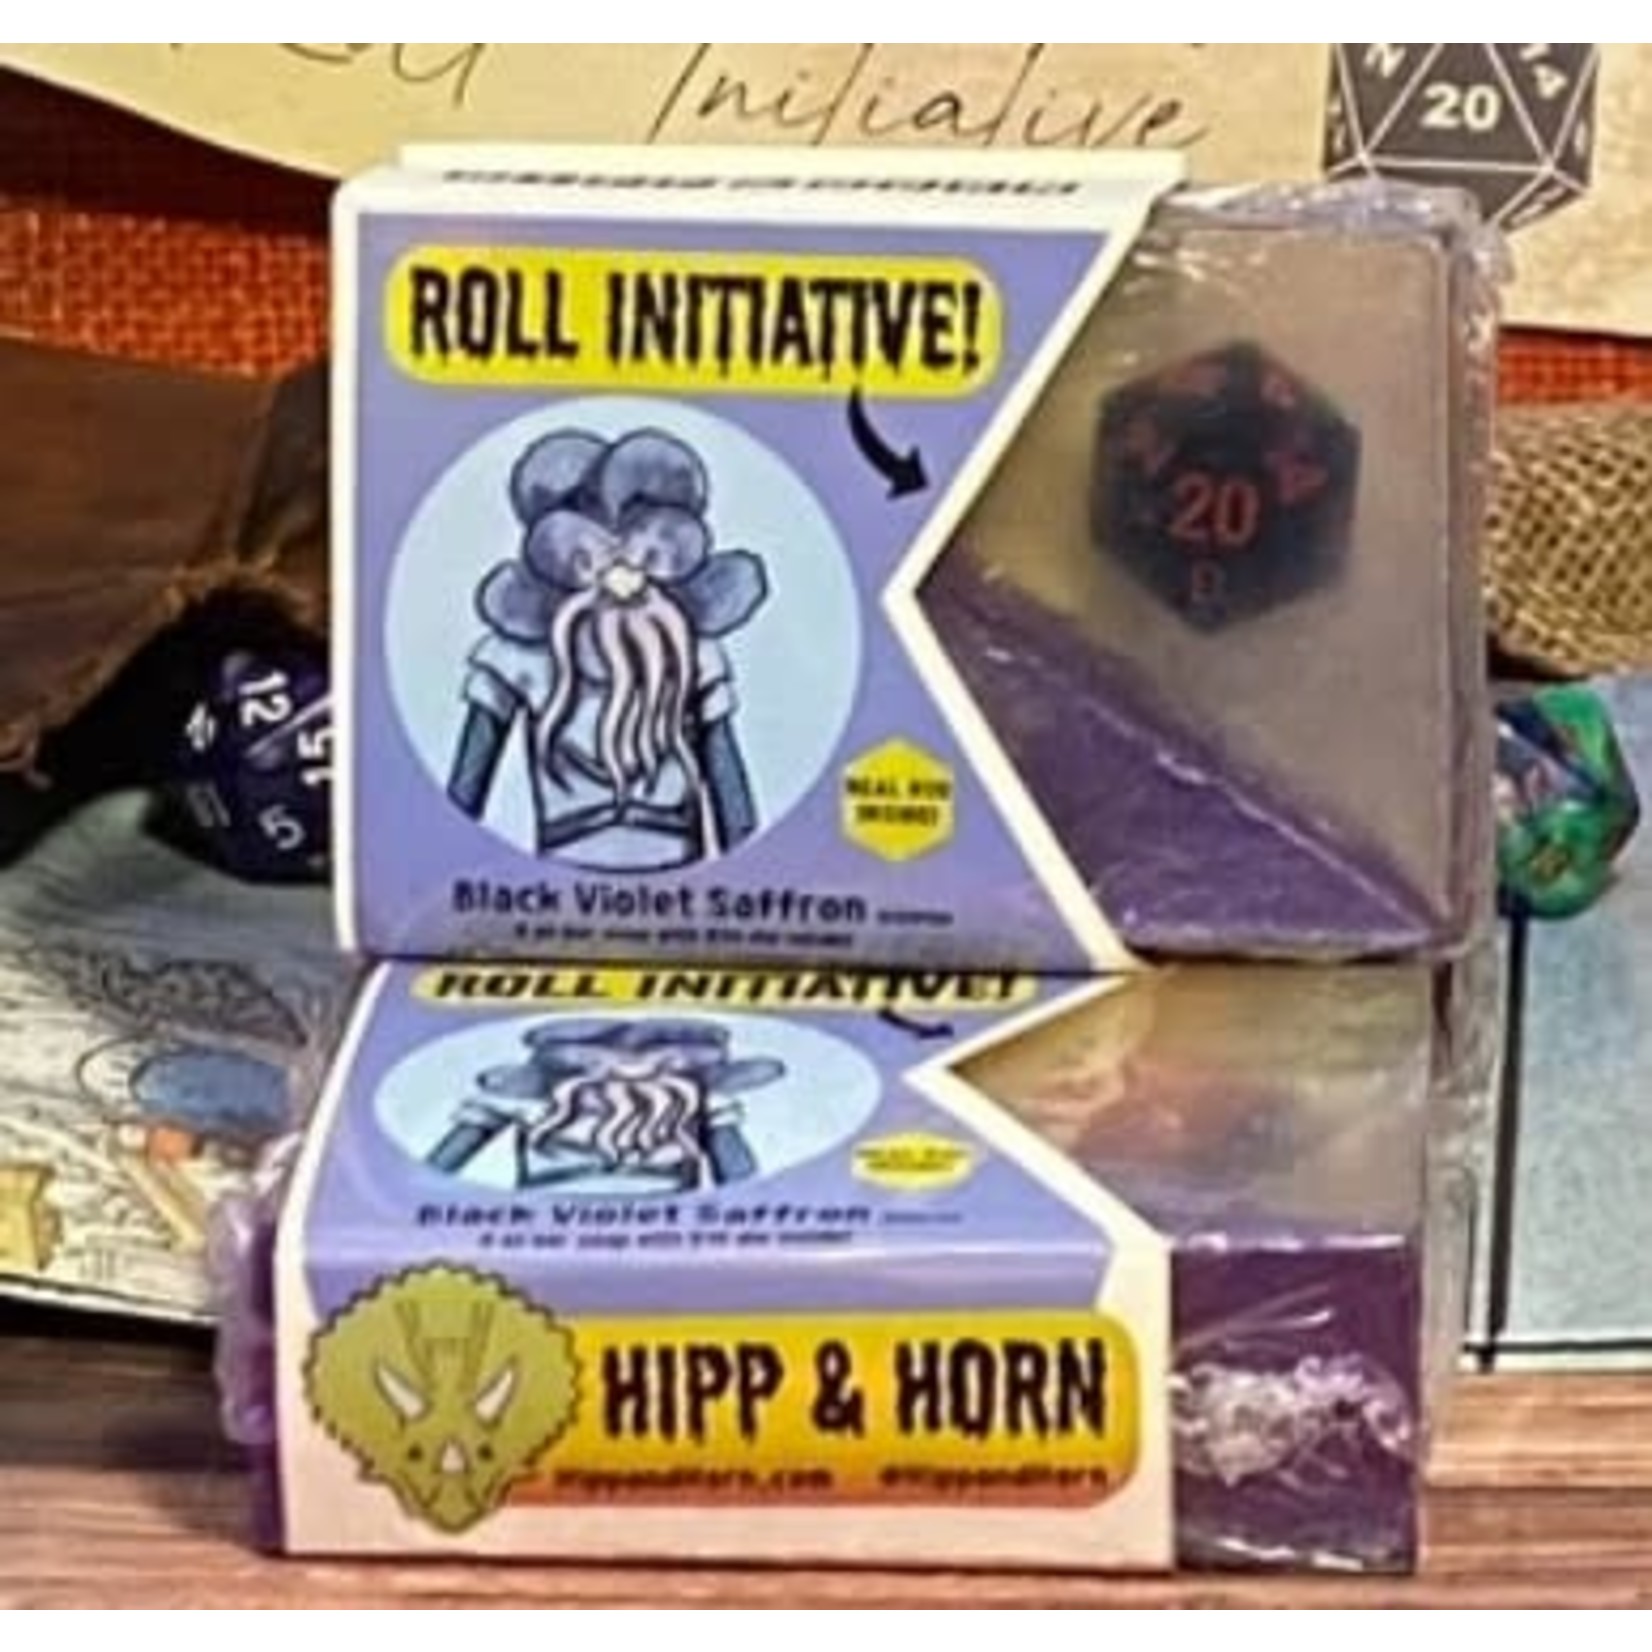 HippAndHorn Roll Initiative! Soap Bar with D20 Inside